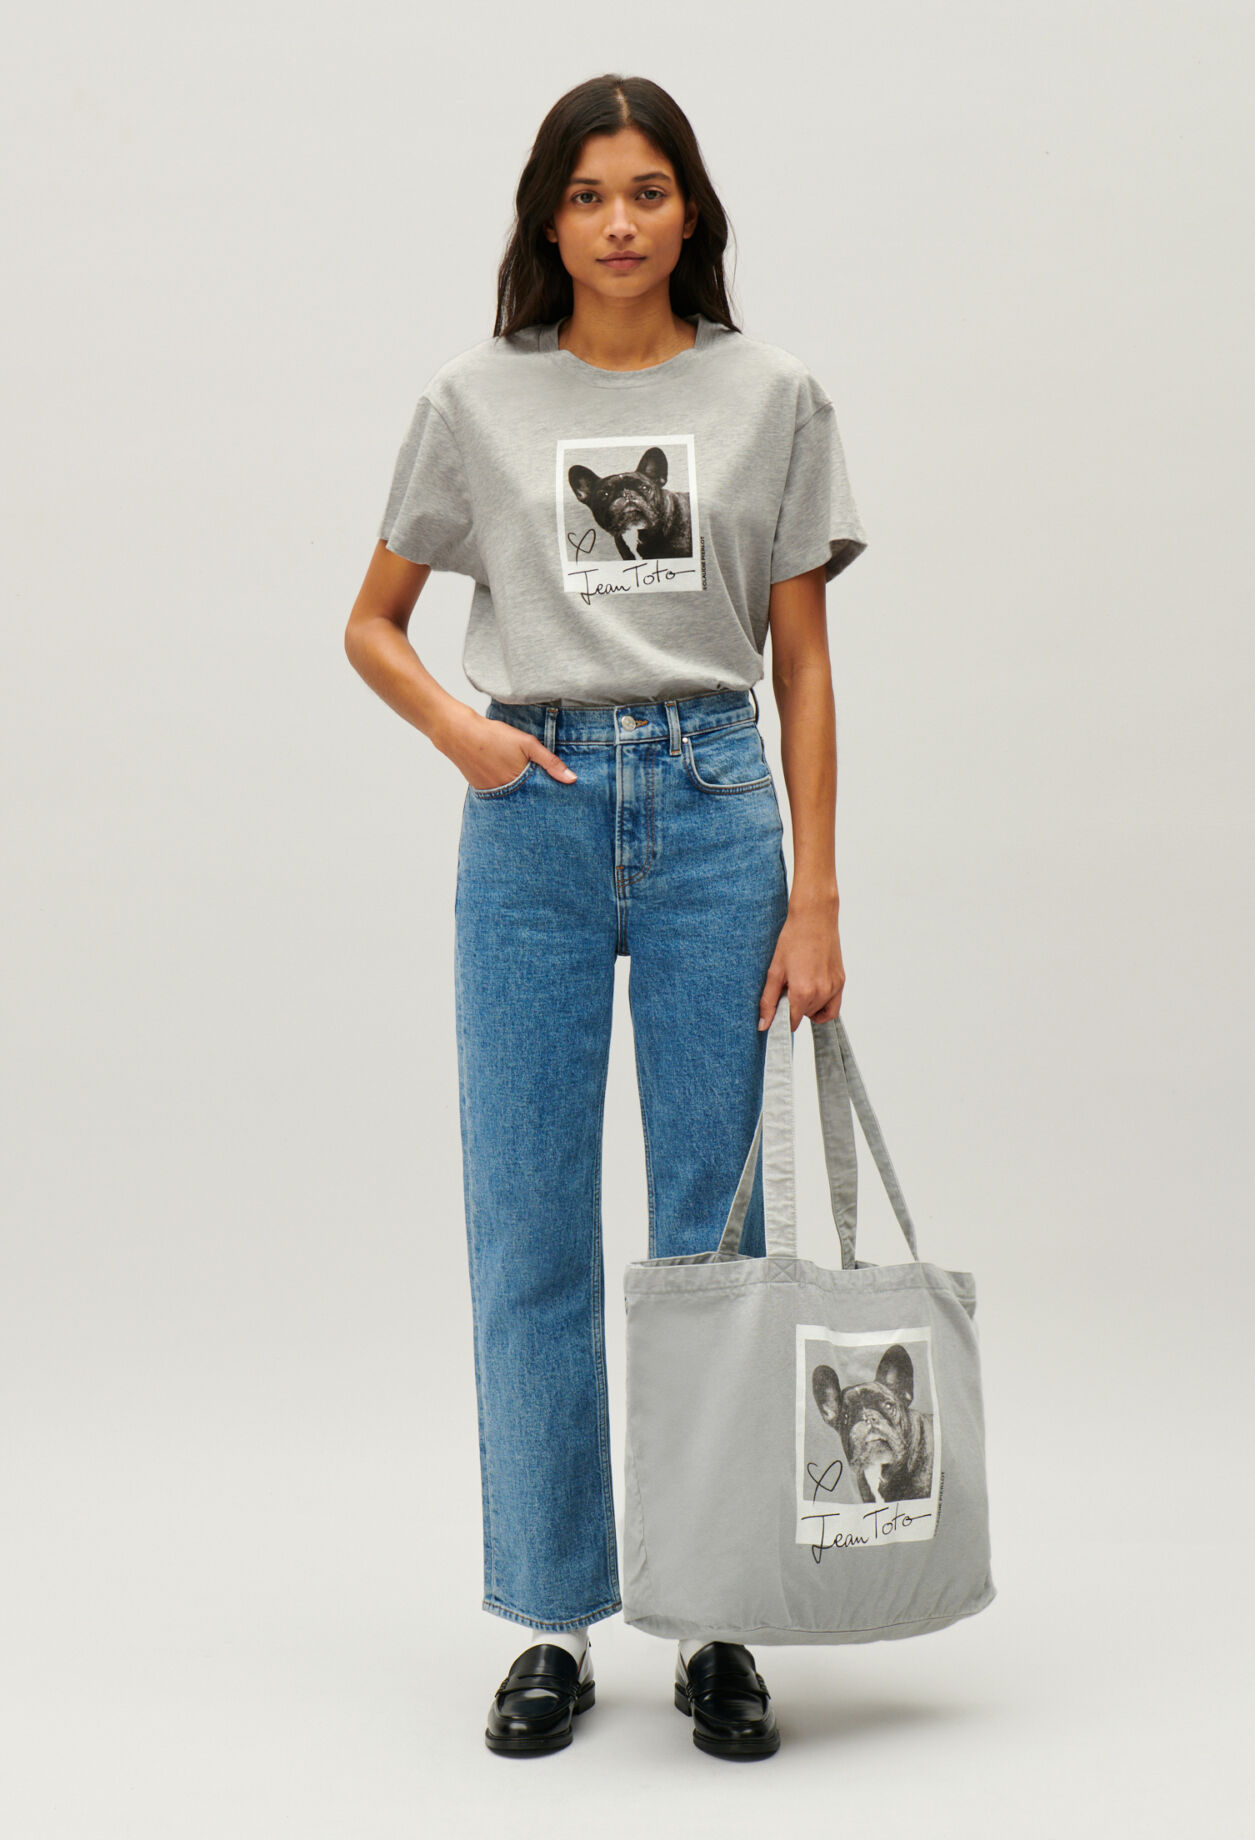 Jean Toto print T-shirt